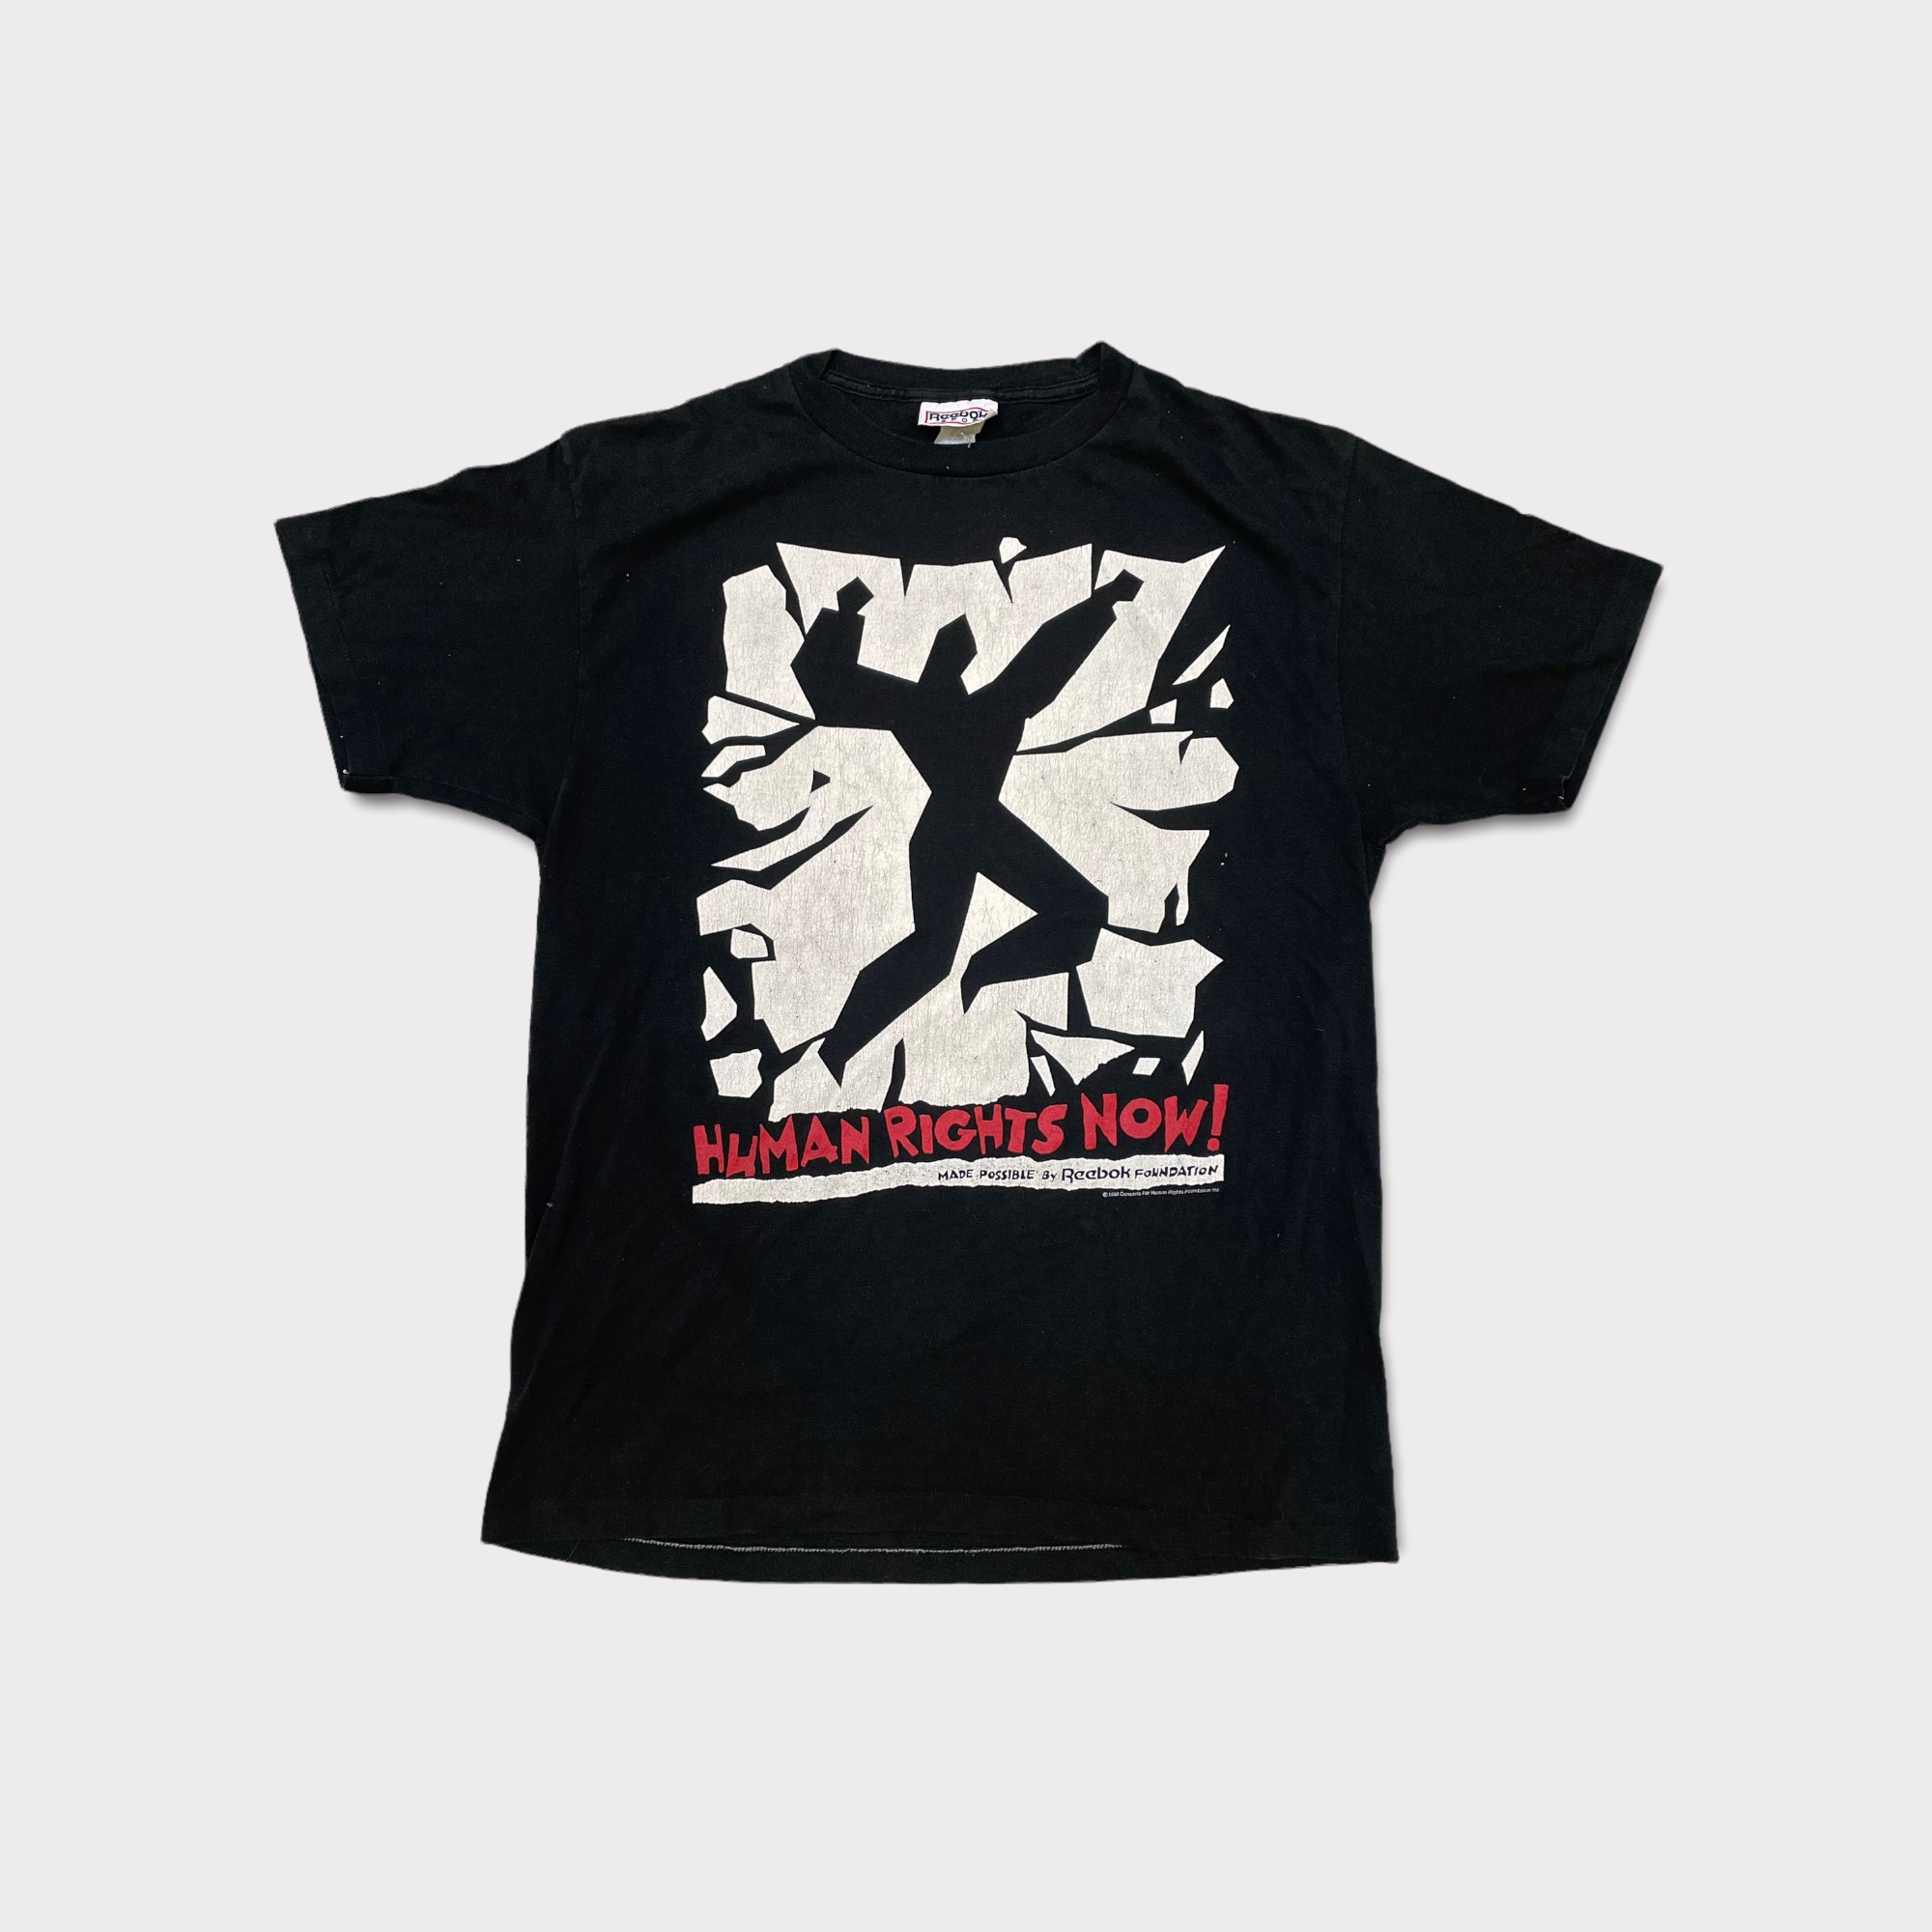 1988 Reebok ‘Human Rights Now!’ T-Shirt